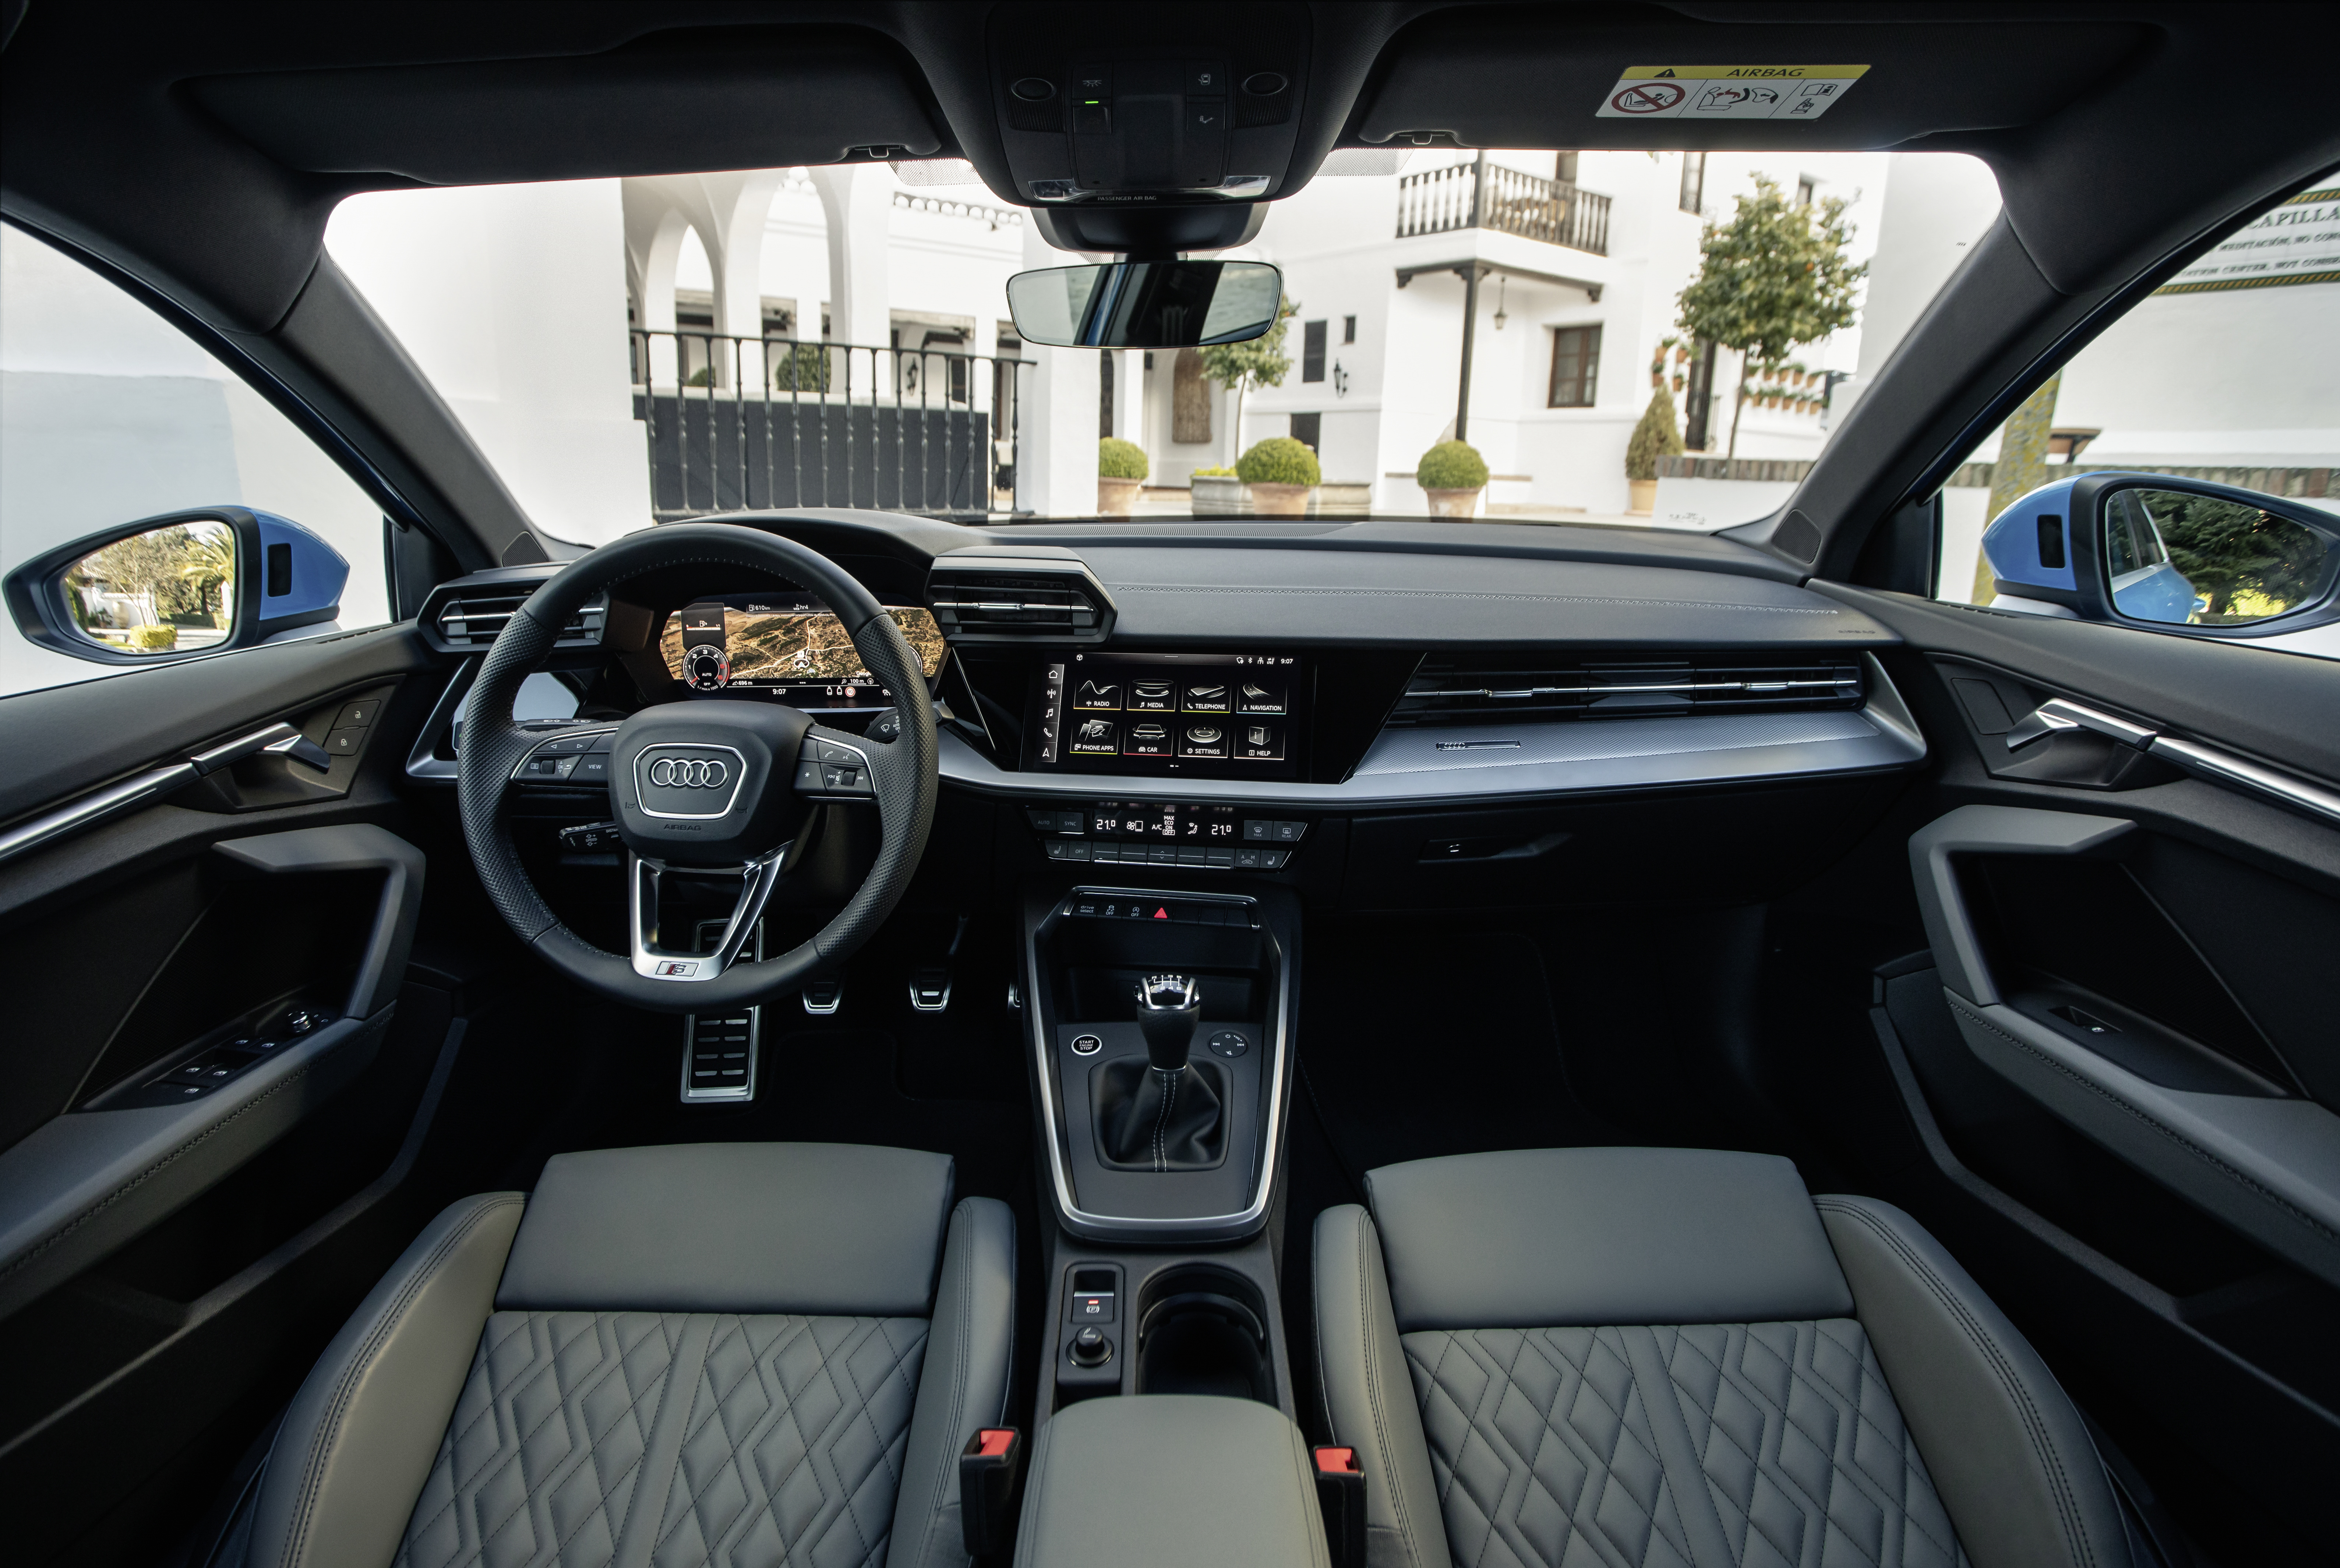 Audi A3 interior